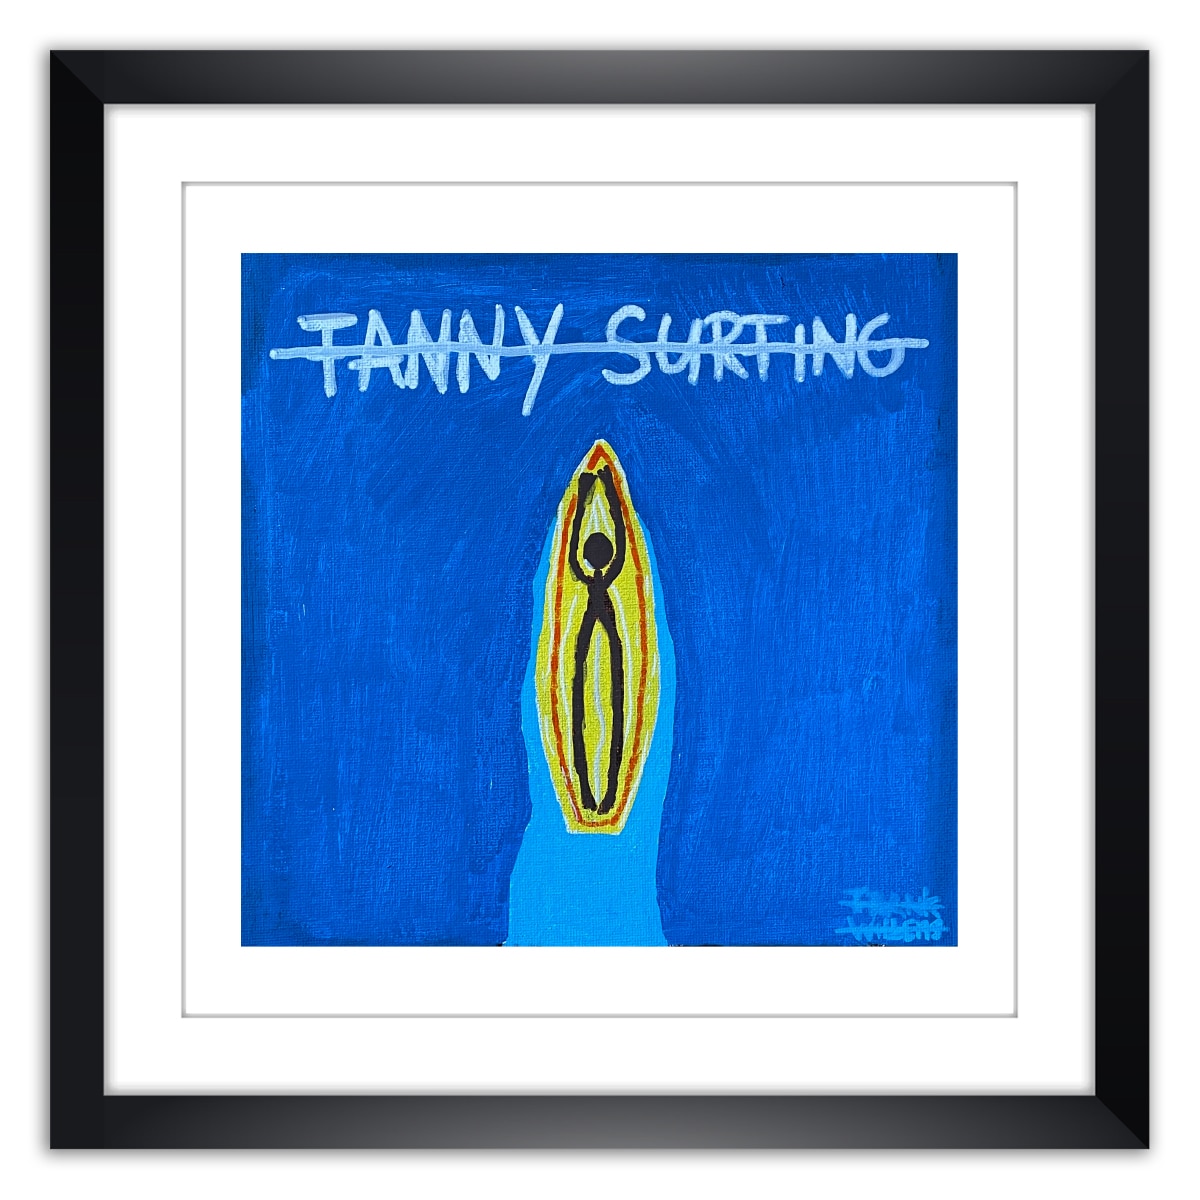 Limited prints - FANNY SURFING framed - Frank Willems